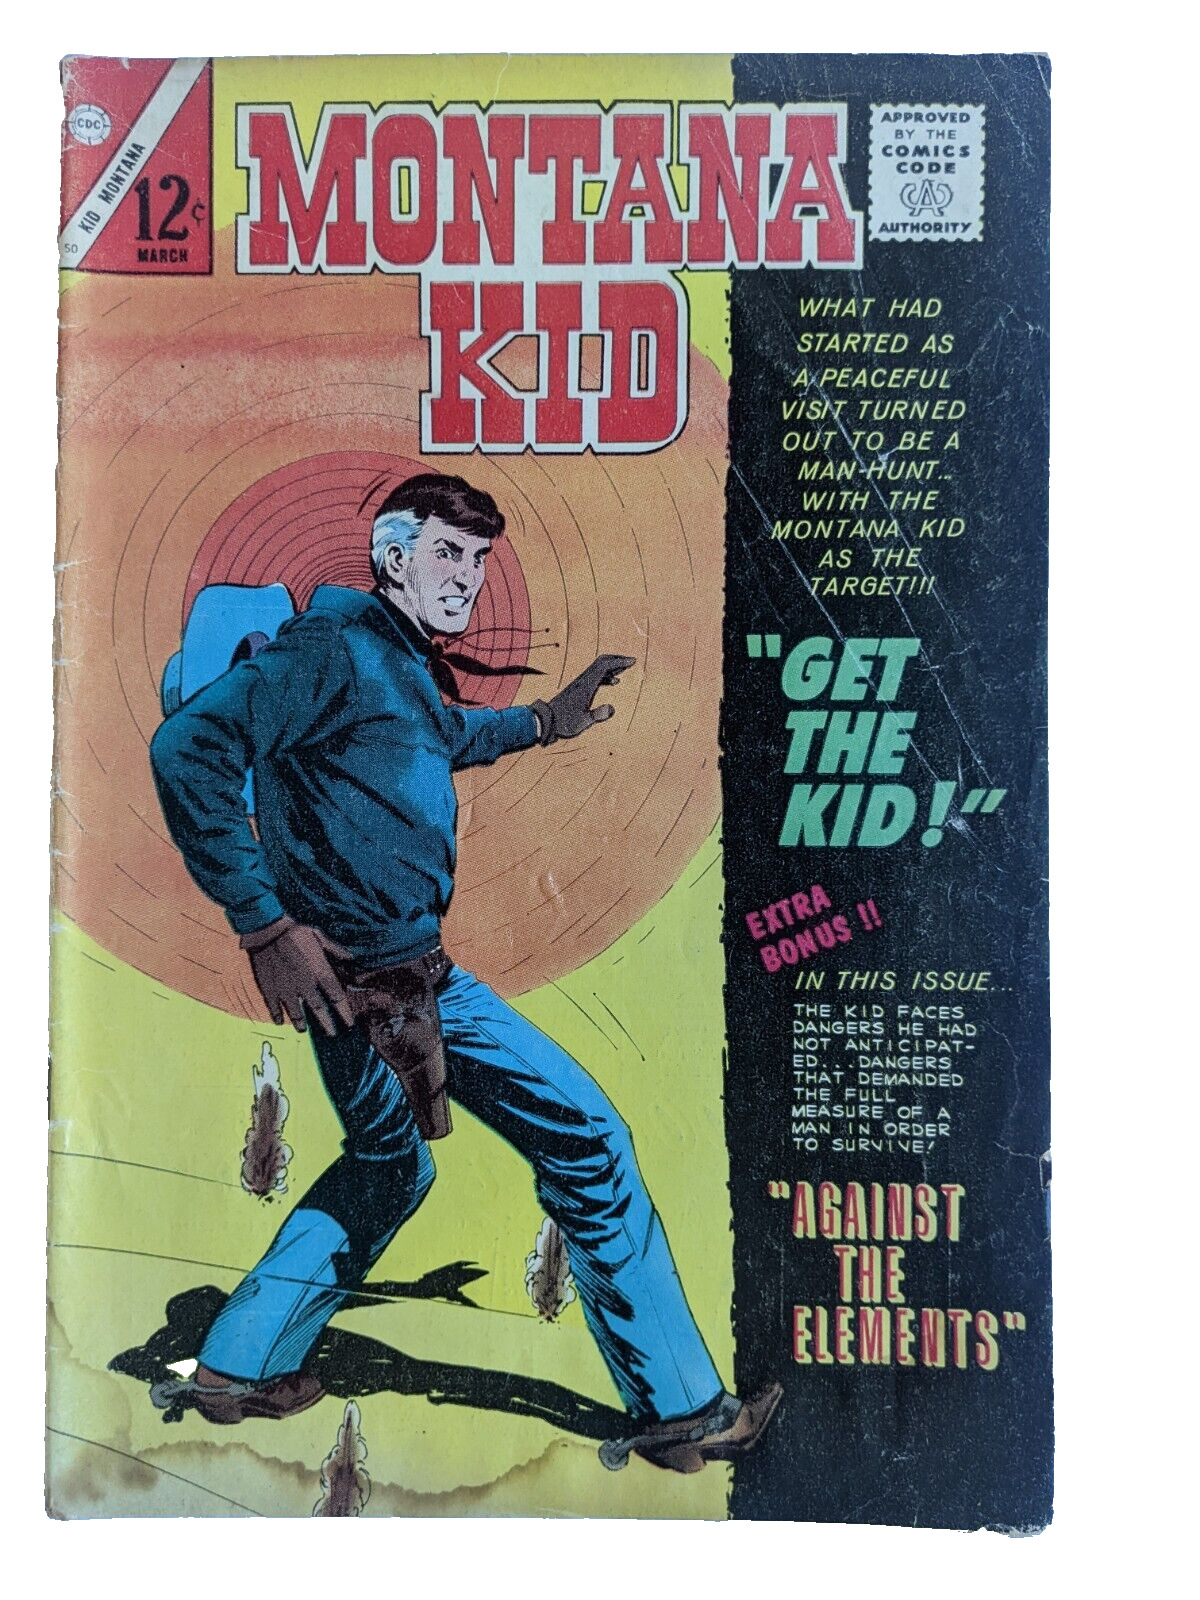 Montana Kid Charlton Comics issue 50 vol 2 March 1965 Western